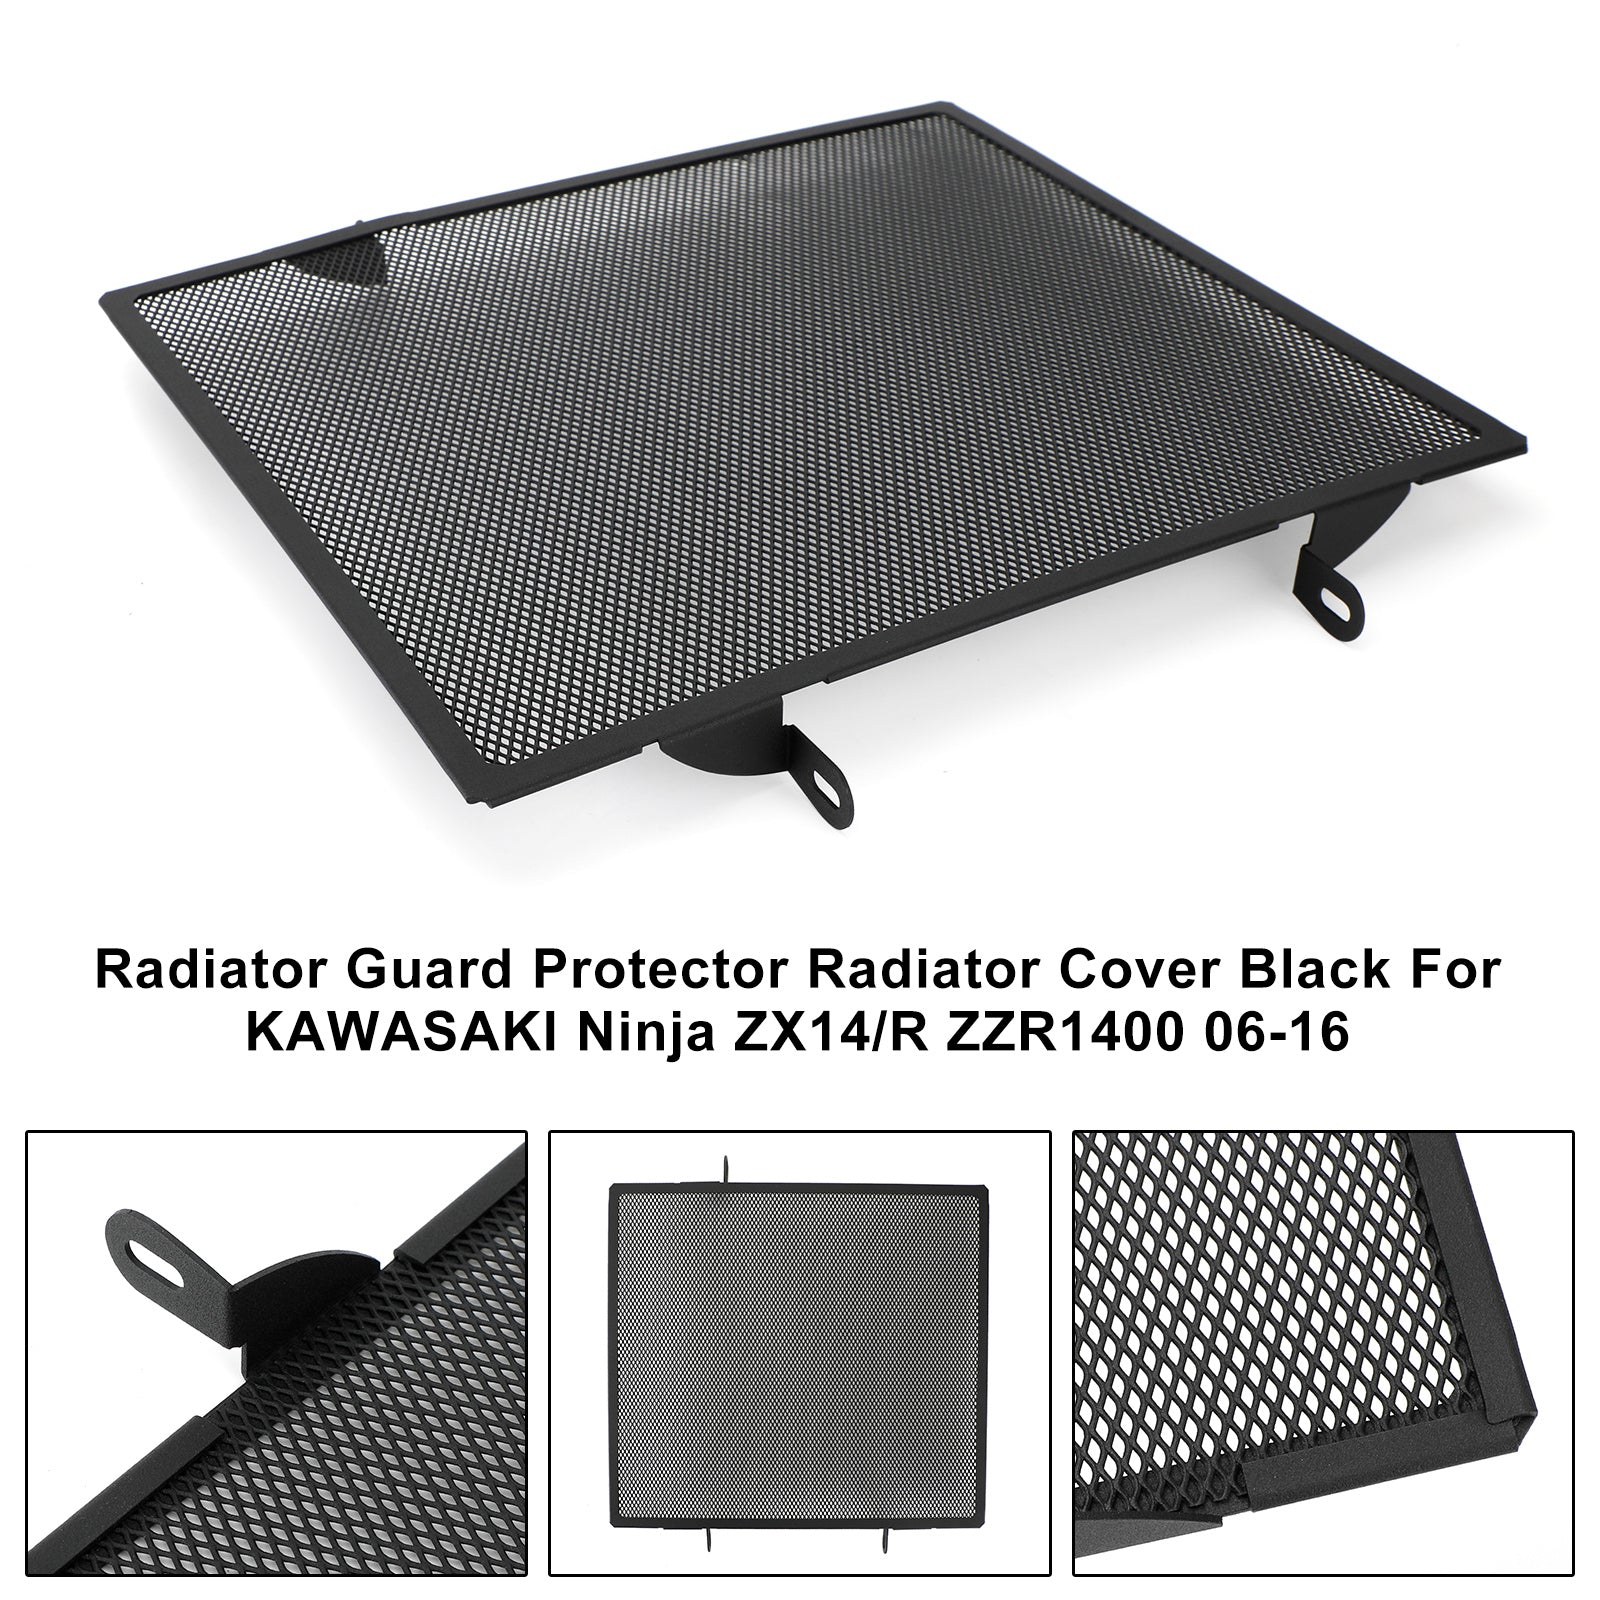 Radiator Guard Protector Radiator Cover For Kawasaki Ninja Zx14/R Zzr1400 06-16